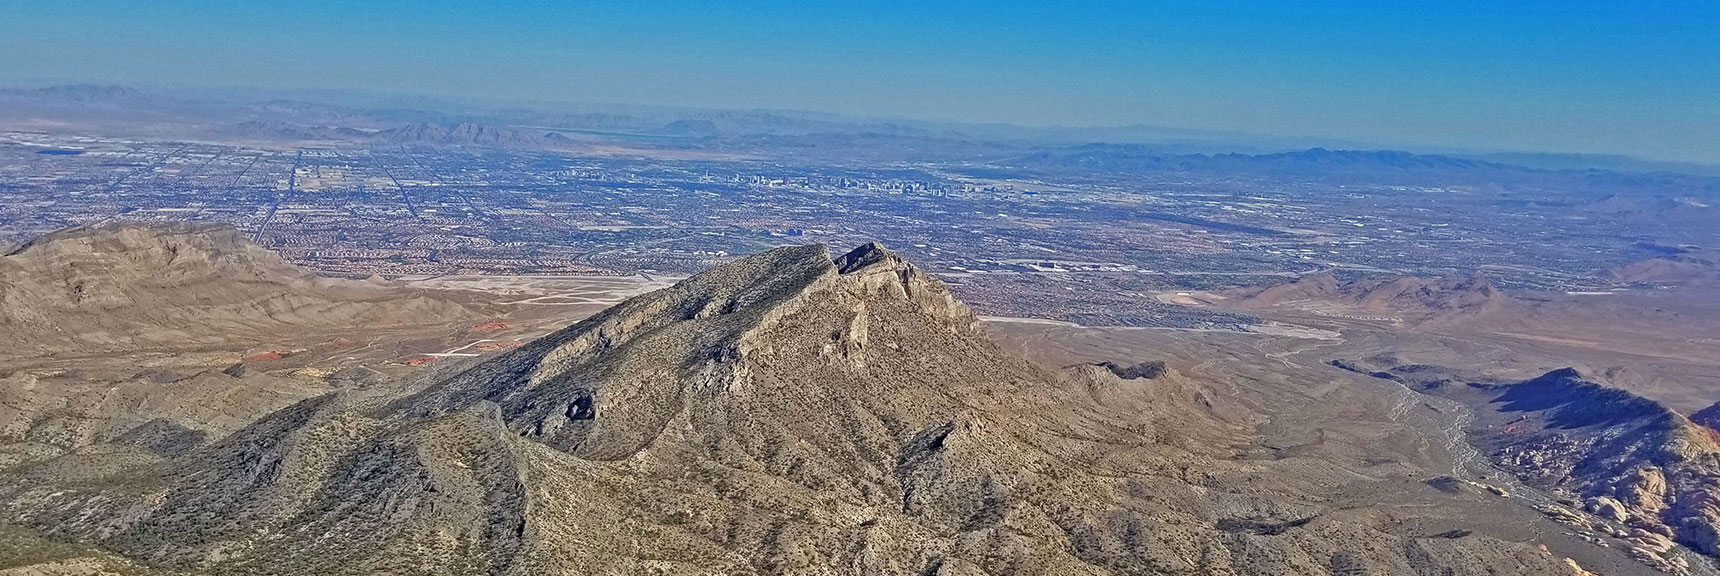 Damsel Peak, Las Vegas Valley and Strip, Frenchman Mt, Lake Mead from La Madre Mt Summit | La Madre Mountain,, El Padre Mountain, Burnt Peak | La Madre Mountains Wilderness, Nevada